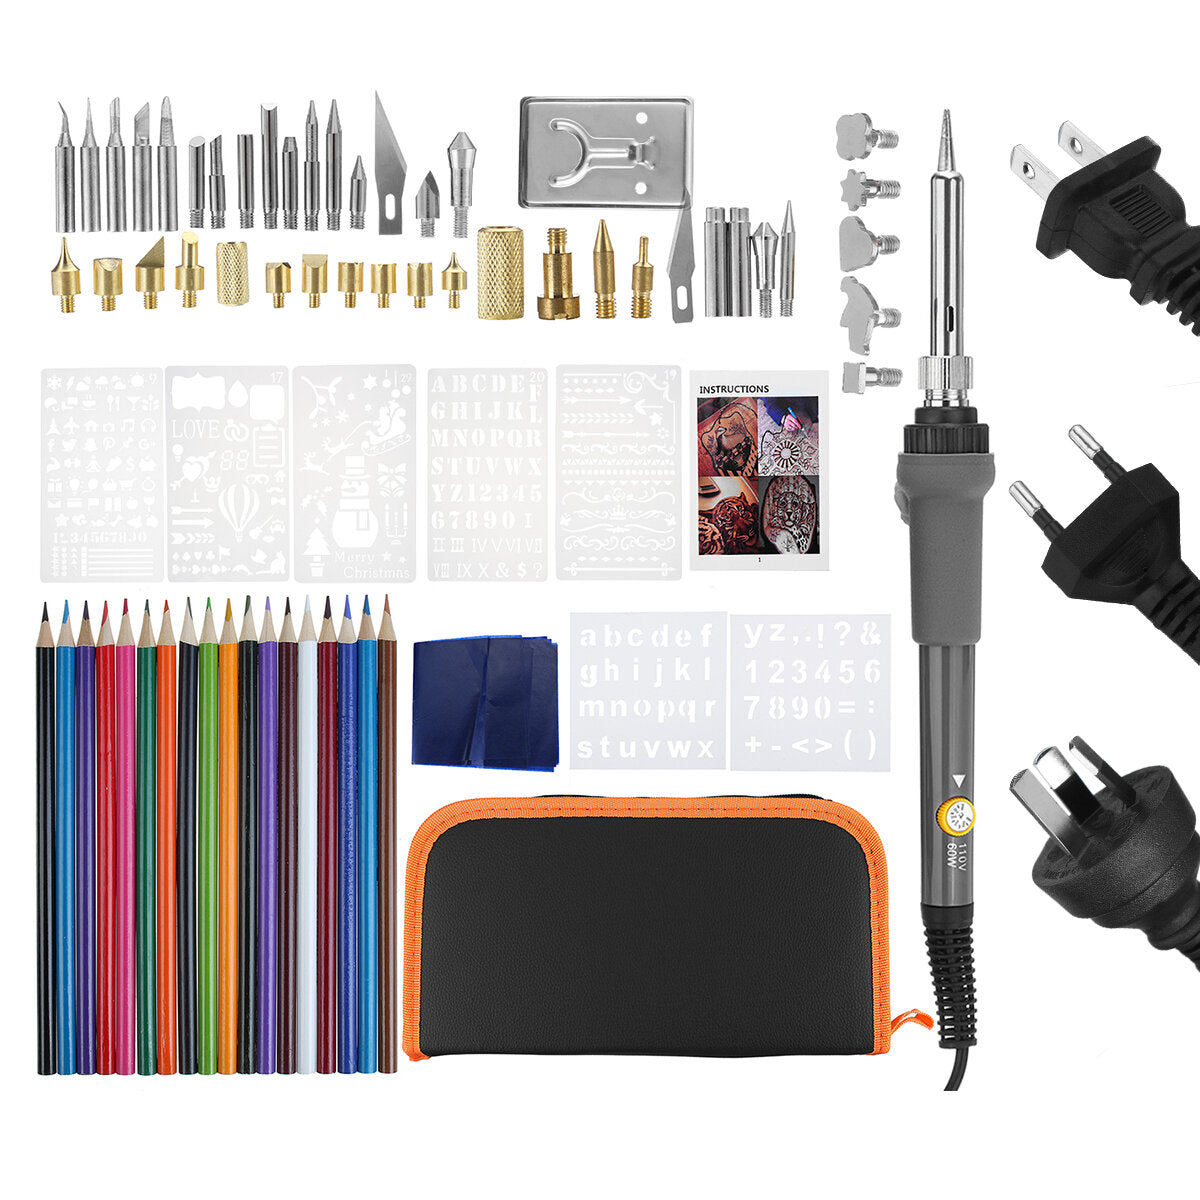 71 stuks / set houtgestookte pen tool solderen stencil iron craft pyrography kit 60 w.